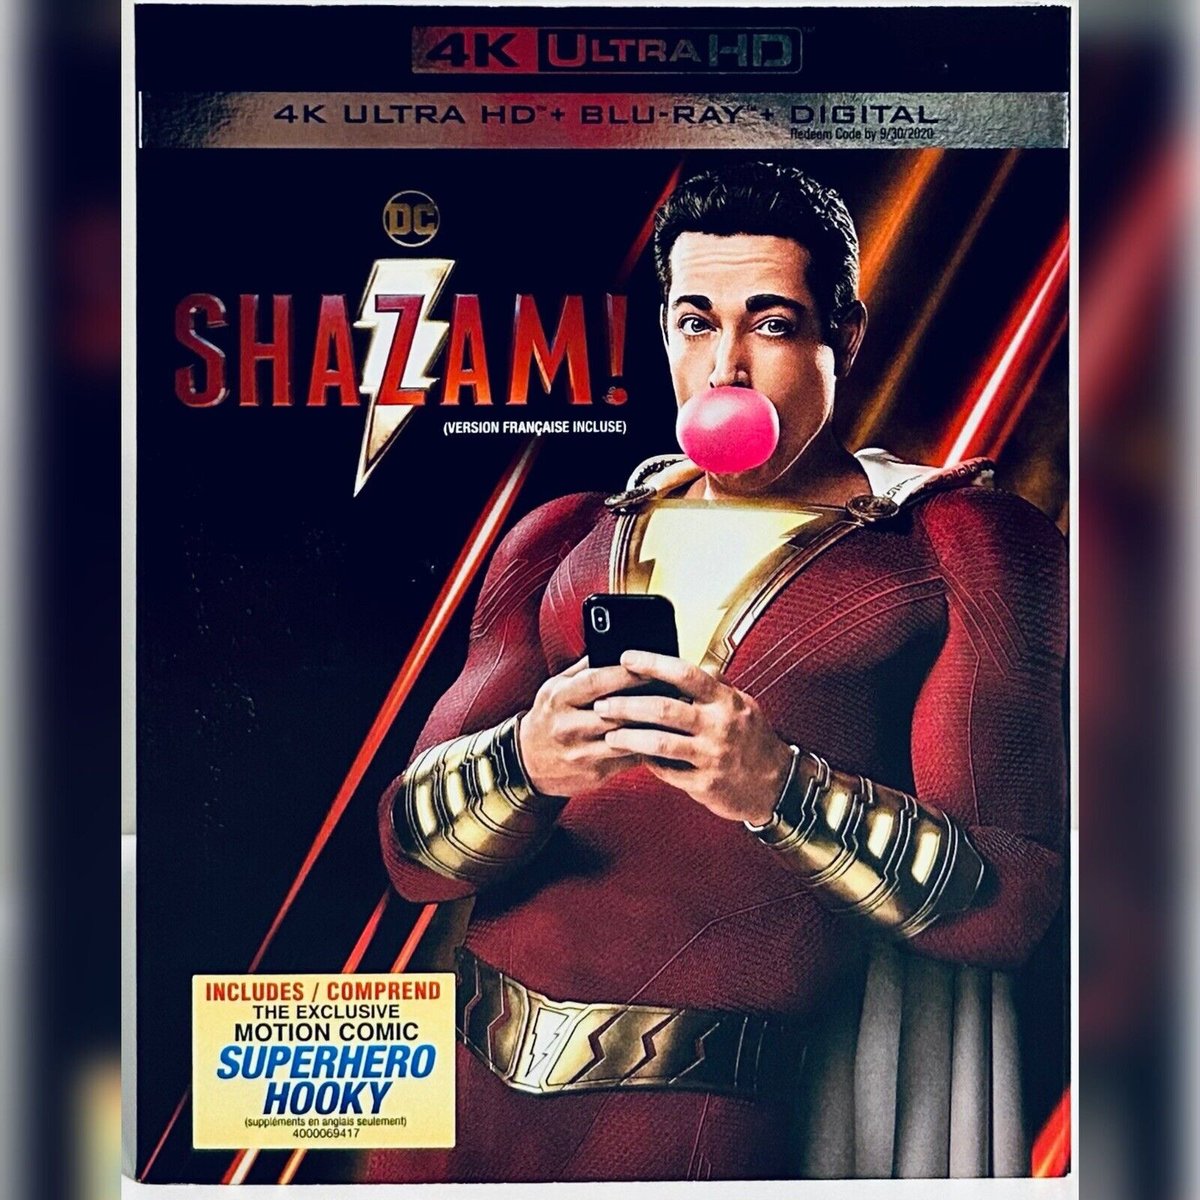 #NewArrival! Shazam! (4K Ultra HD/Blu-ray 2019) w/ Slipcover Action/Comedy DC 2-Disc Set rareflicksplus.com/product-page/s… #checkitout #Shazam #4K #Slipcover #Action #Comedy #DC #DCU #DCCOMICS #Superhero #Bluray #Blurays #PhysicalMedia #BluRayStore #4k #4kUHD #UHD